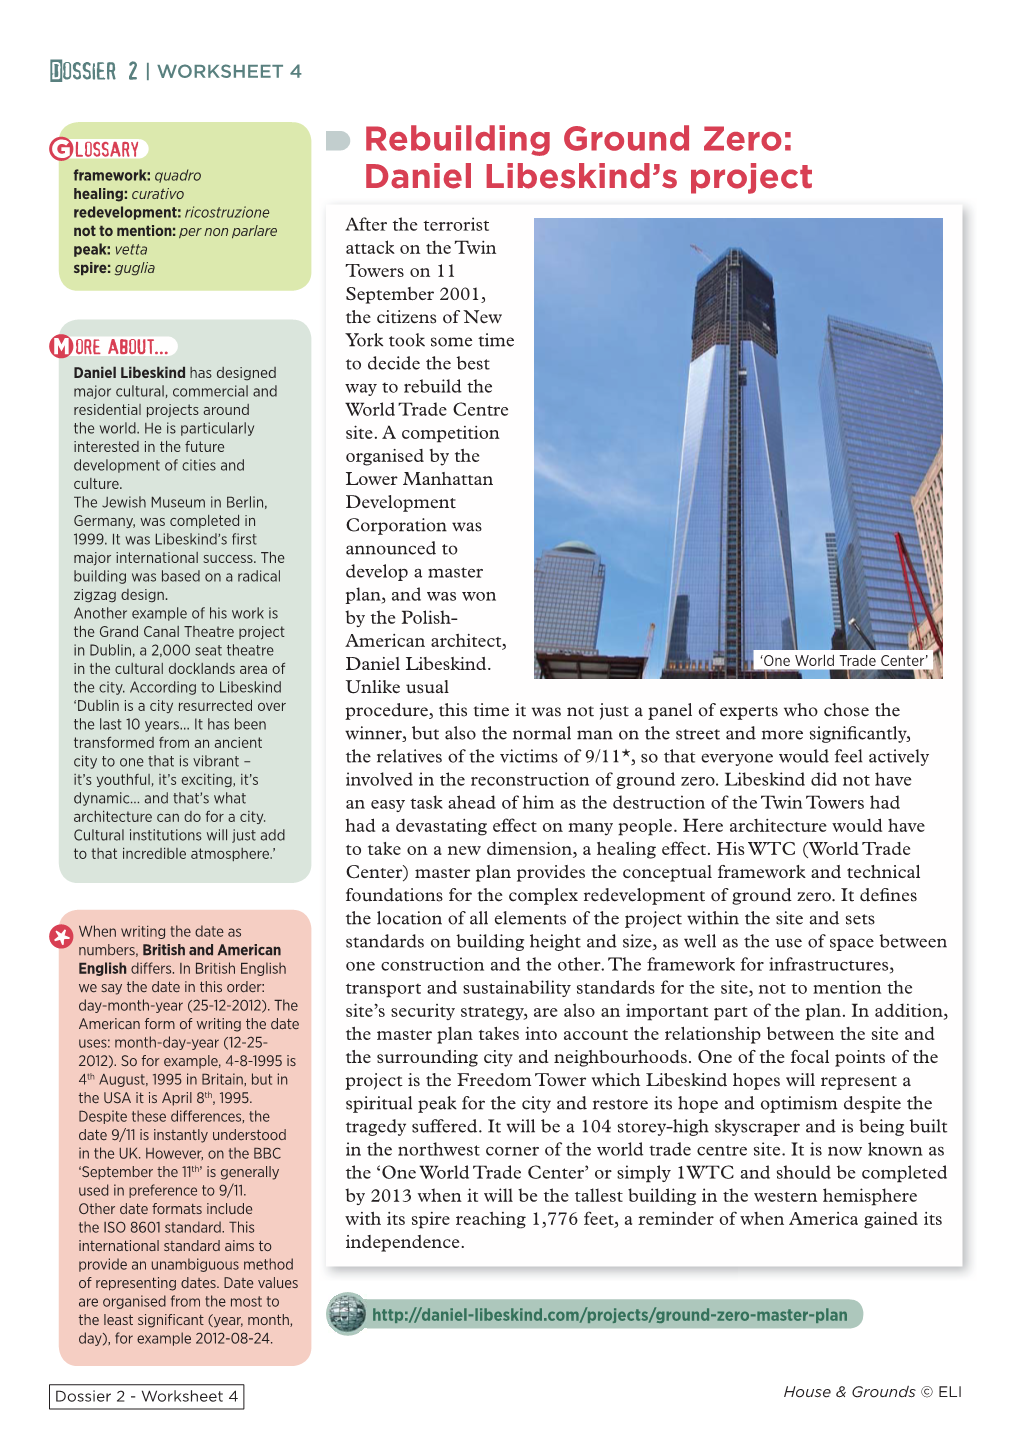 Rebuilding Ground Zero: Daniel Libeskind's Project